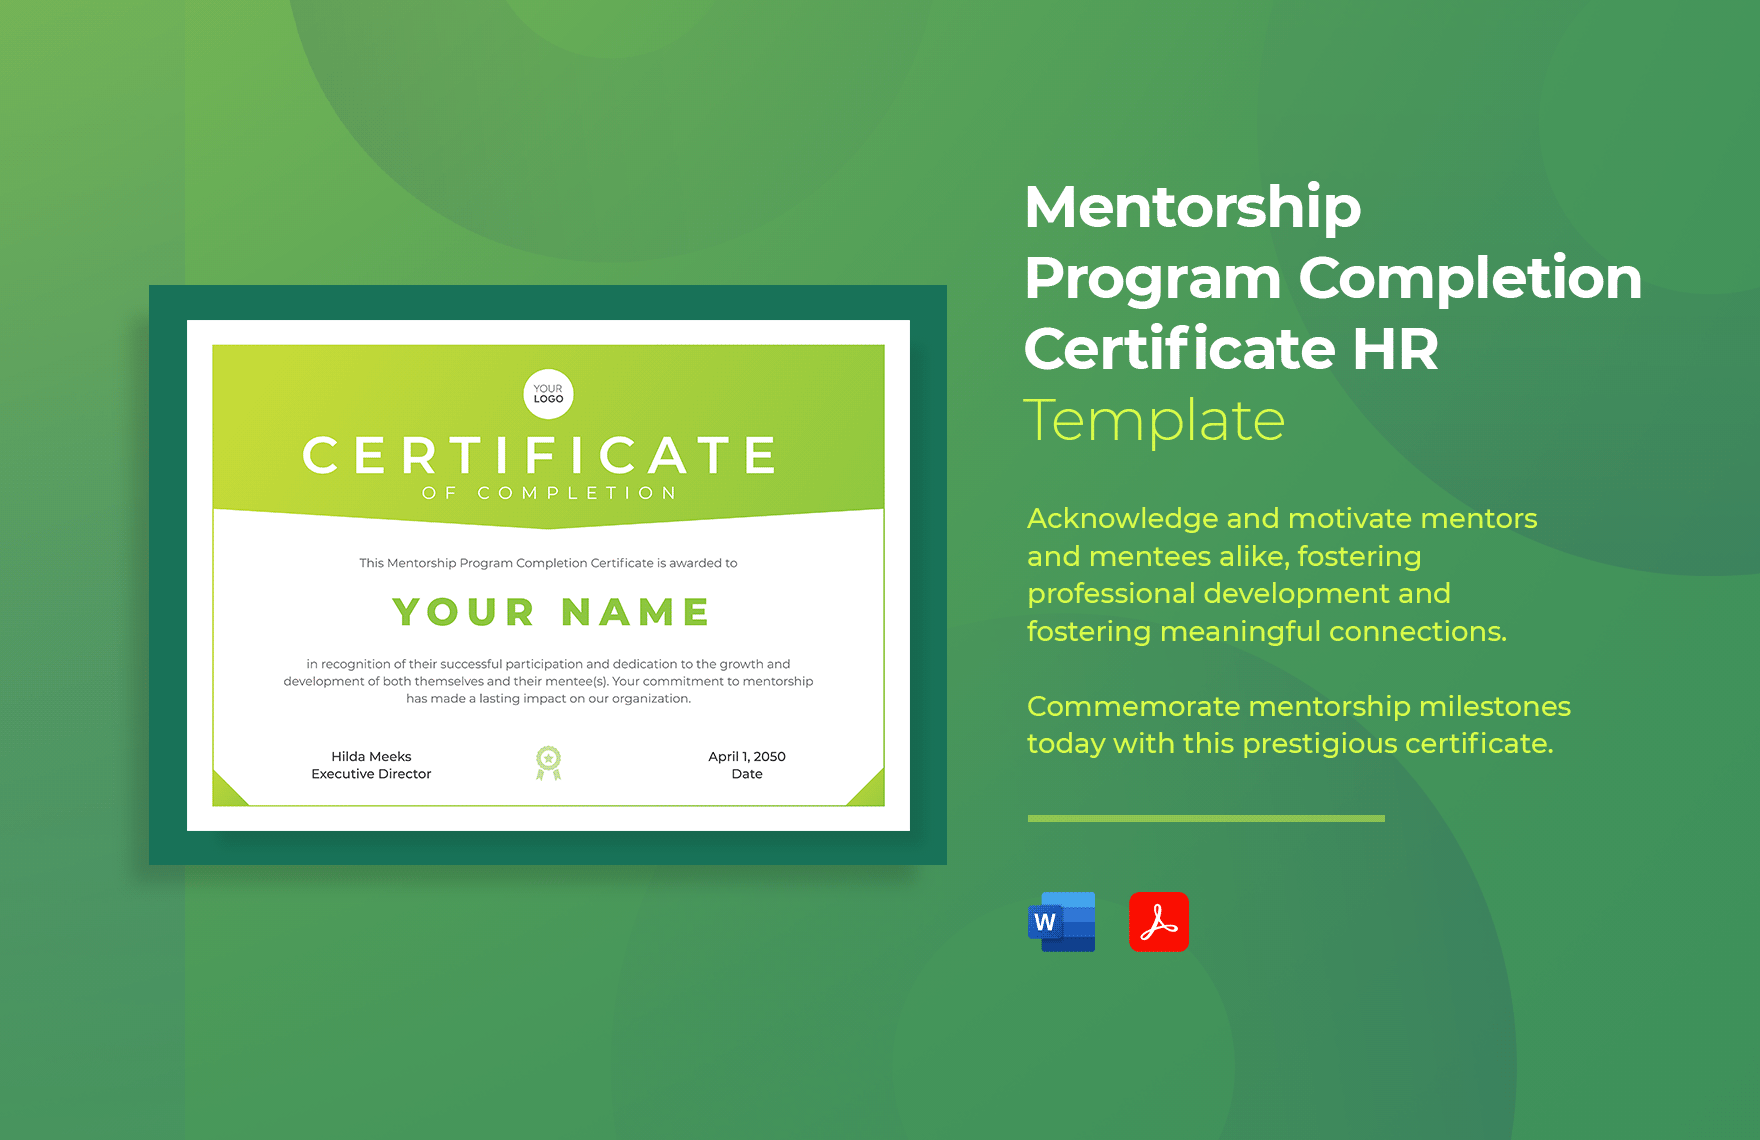 Mentorship Program Completion Certificate HR Template